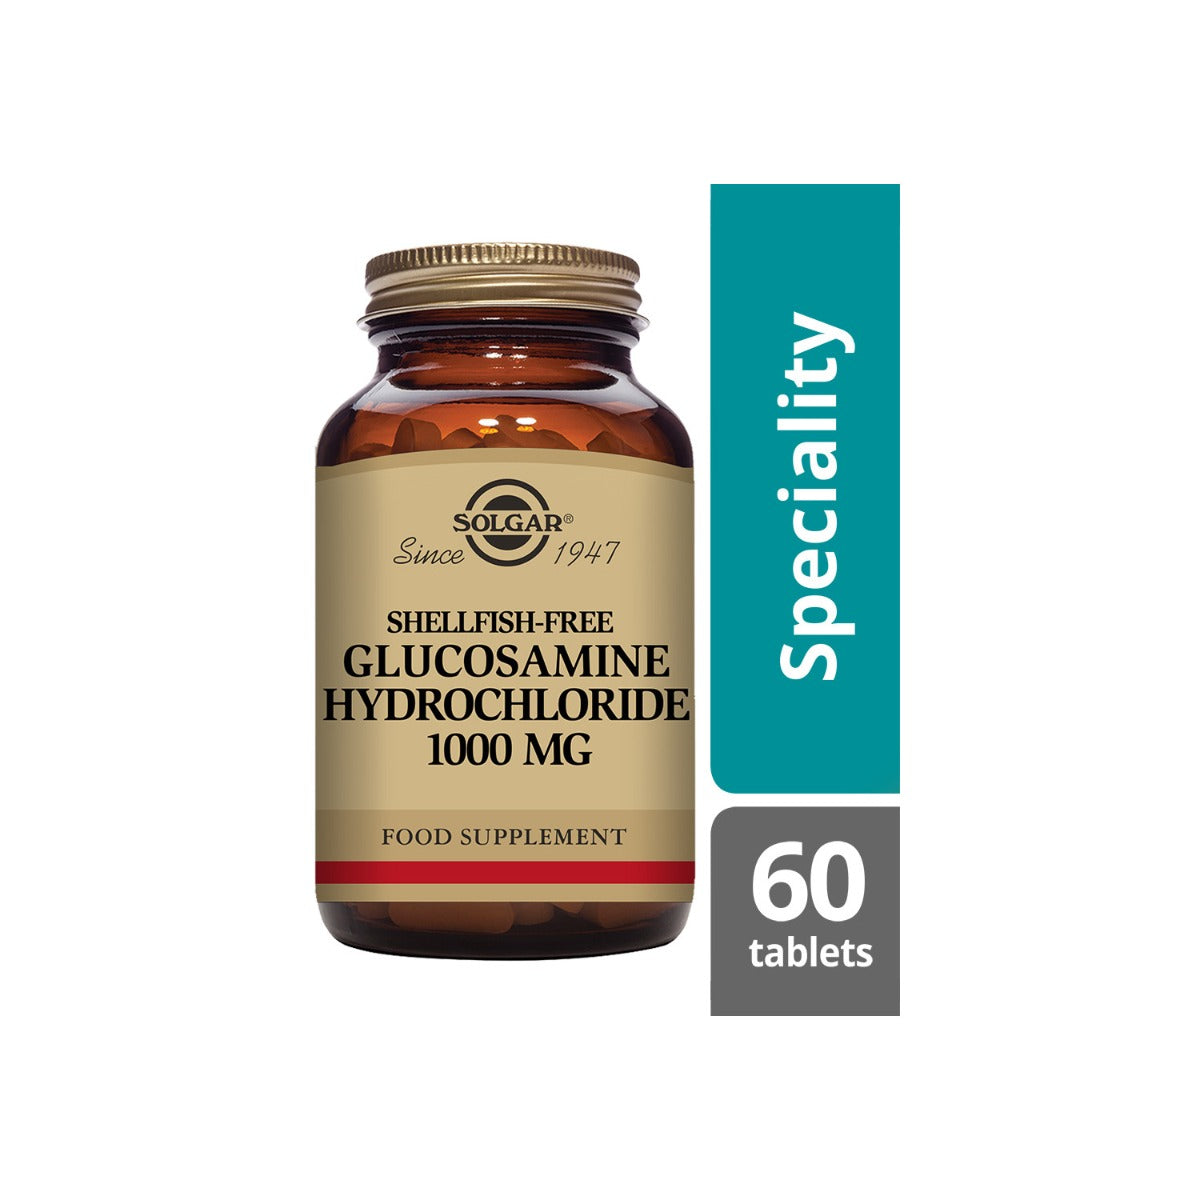 Solgar® Glucosamine Hydrochloride 1000 mg Tablets - Pack of 60